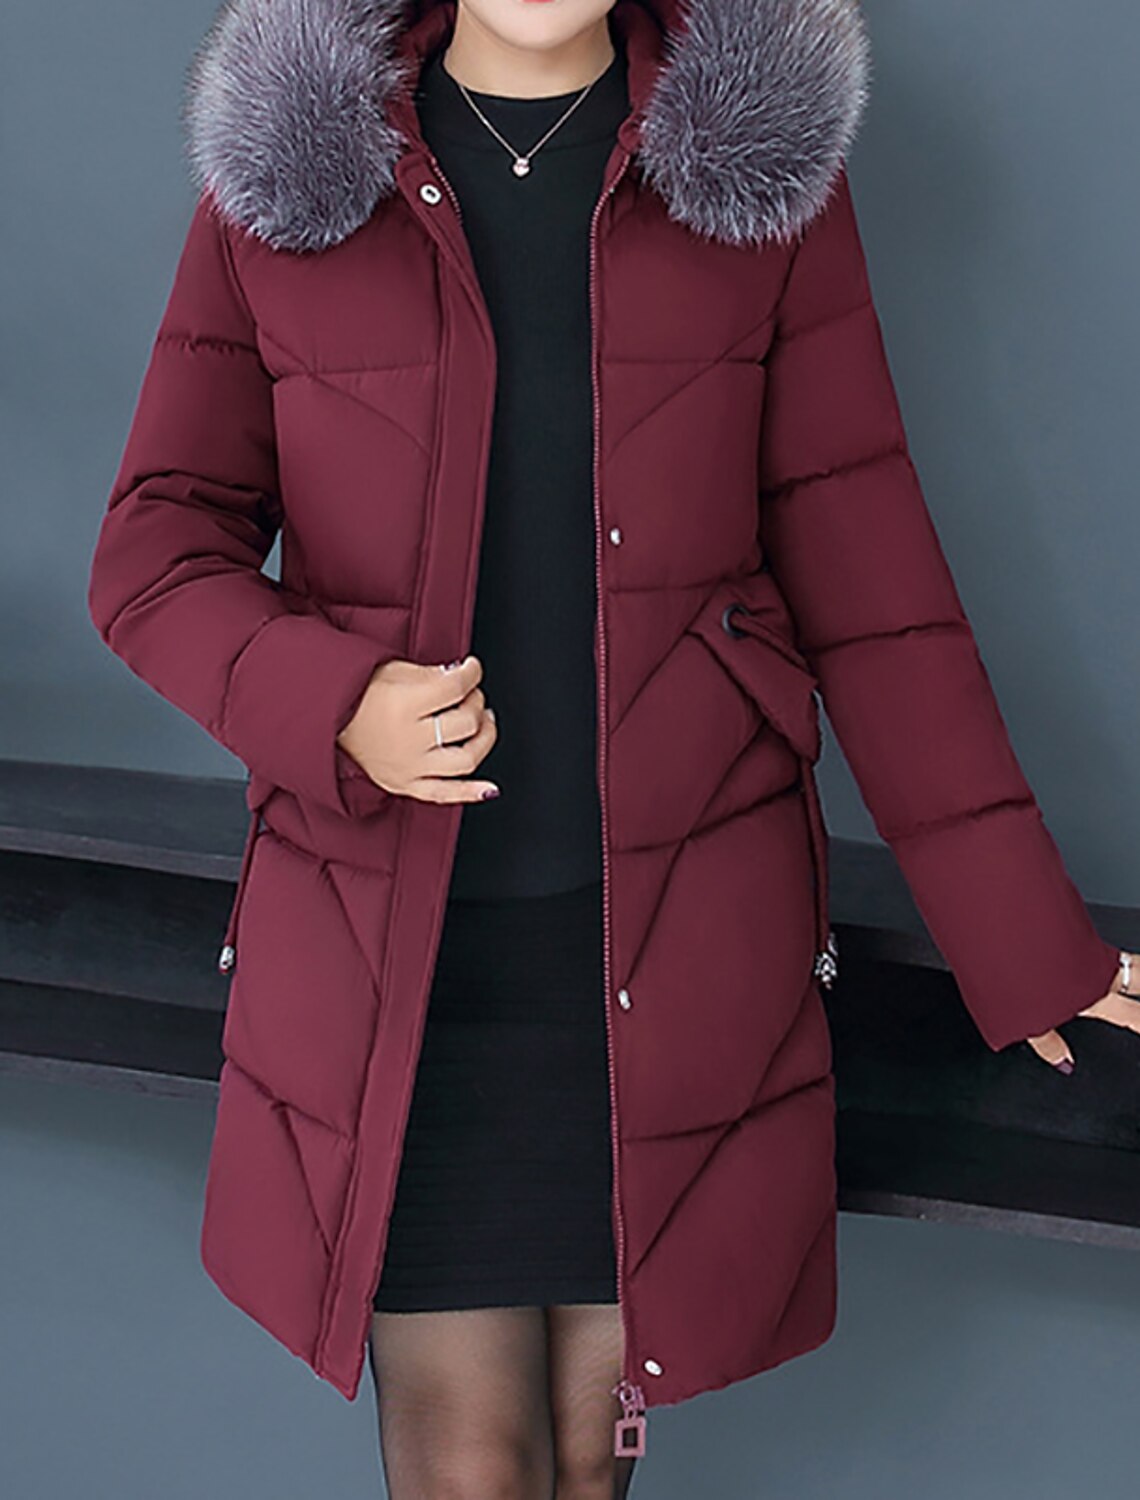 Womens Long Sleeve Medium-long Style Padded Warm Zipper Hooded Fashion Coat B634 